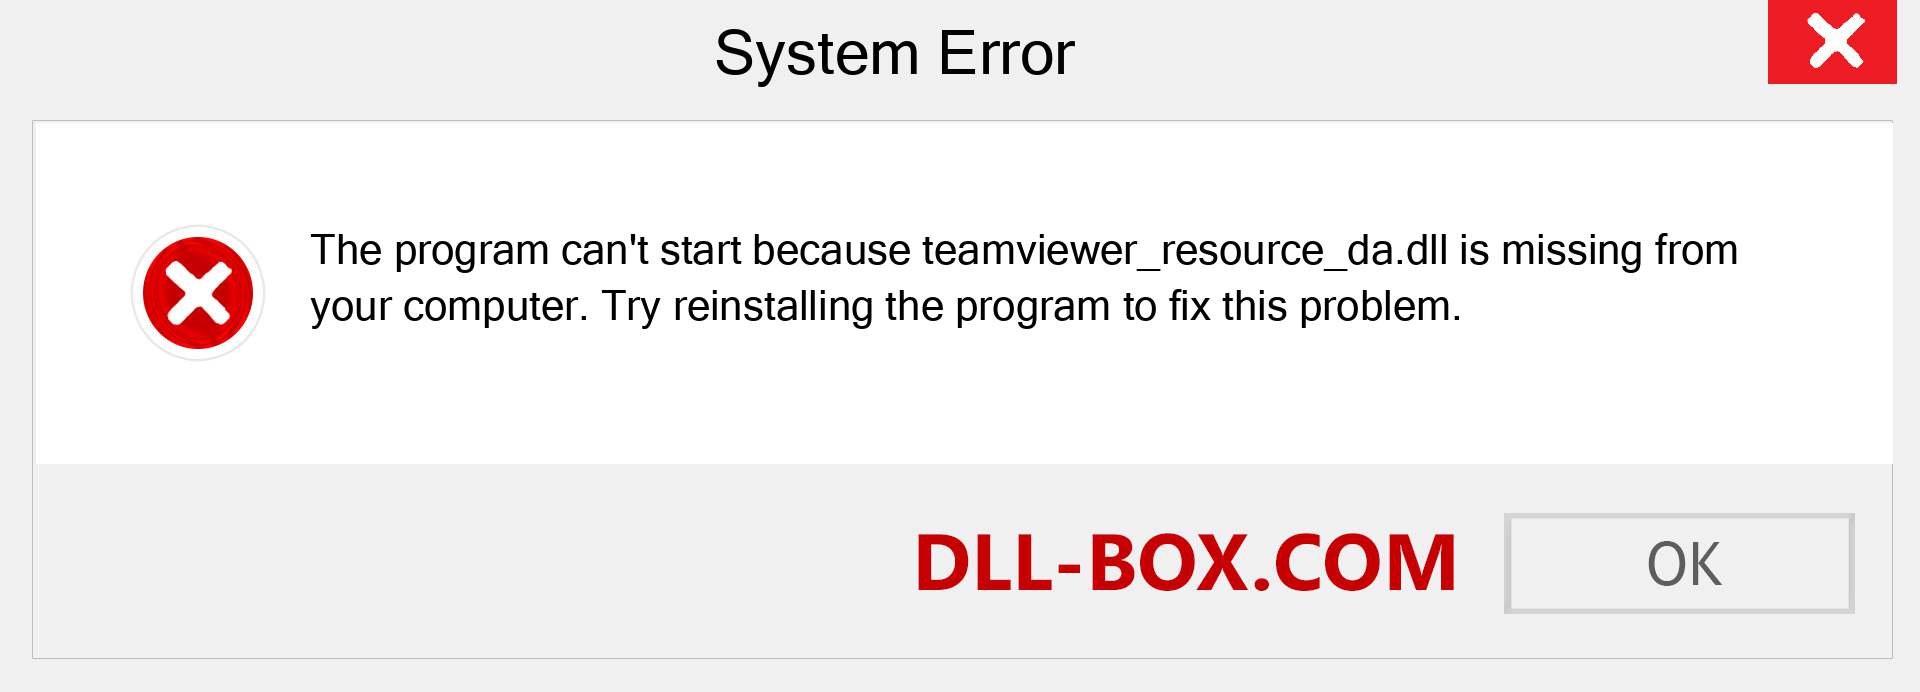  teamviewer_resource_da.dll file is missing?. Download for Windows 7, 8, 10 - Fix  teamviewer_resource_da dll Missing Error on Windows, photos, images